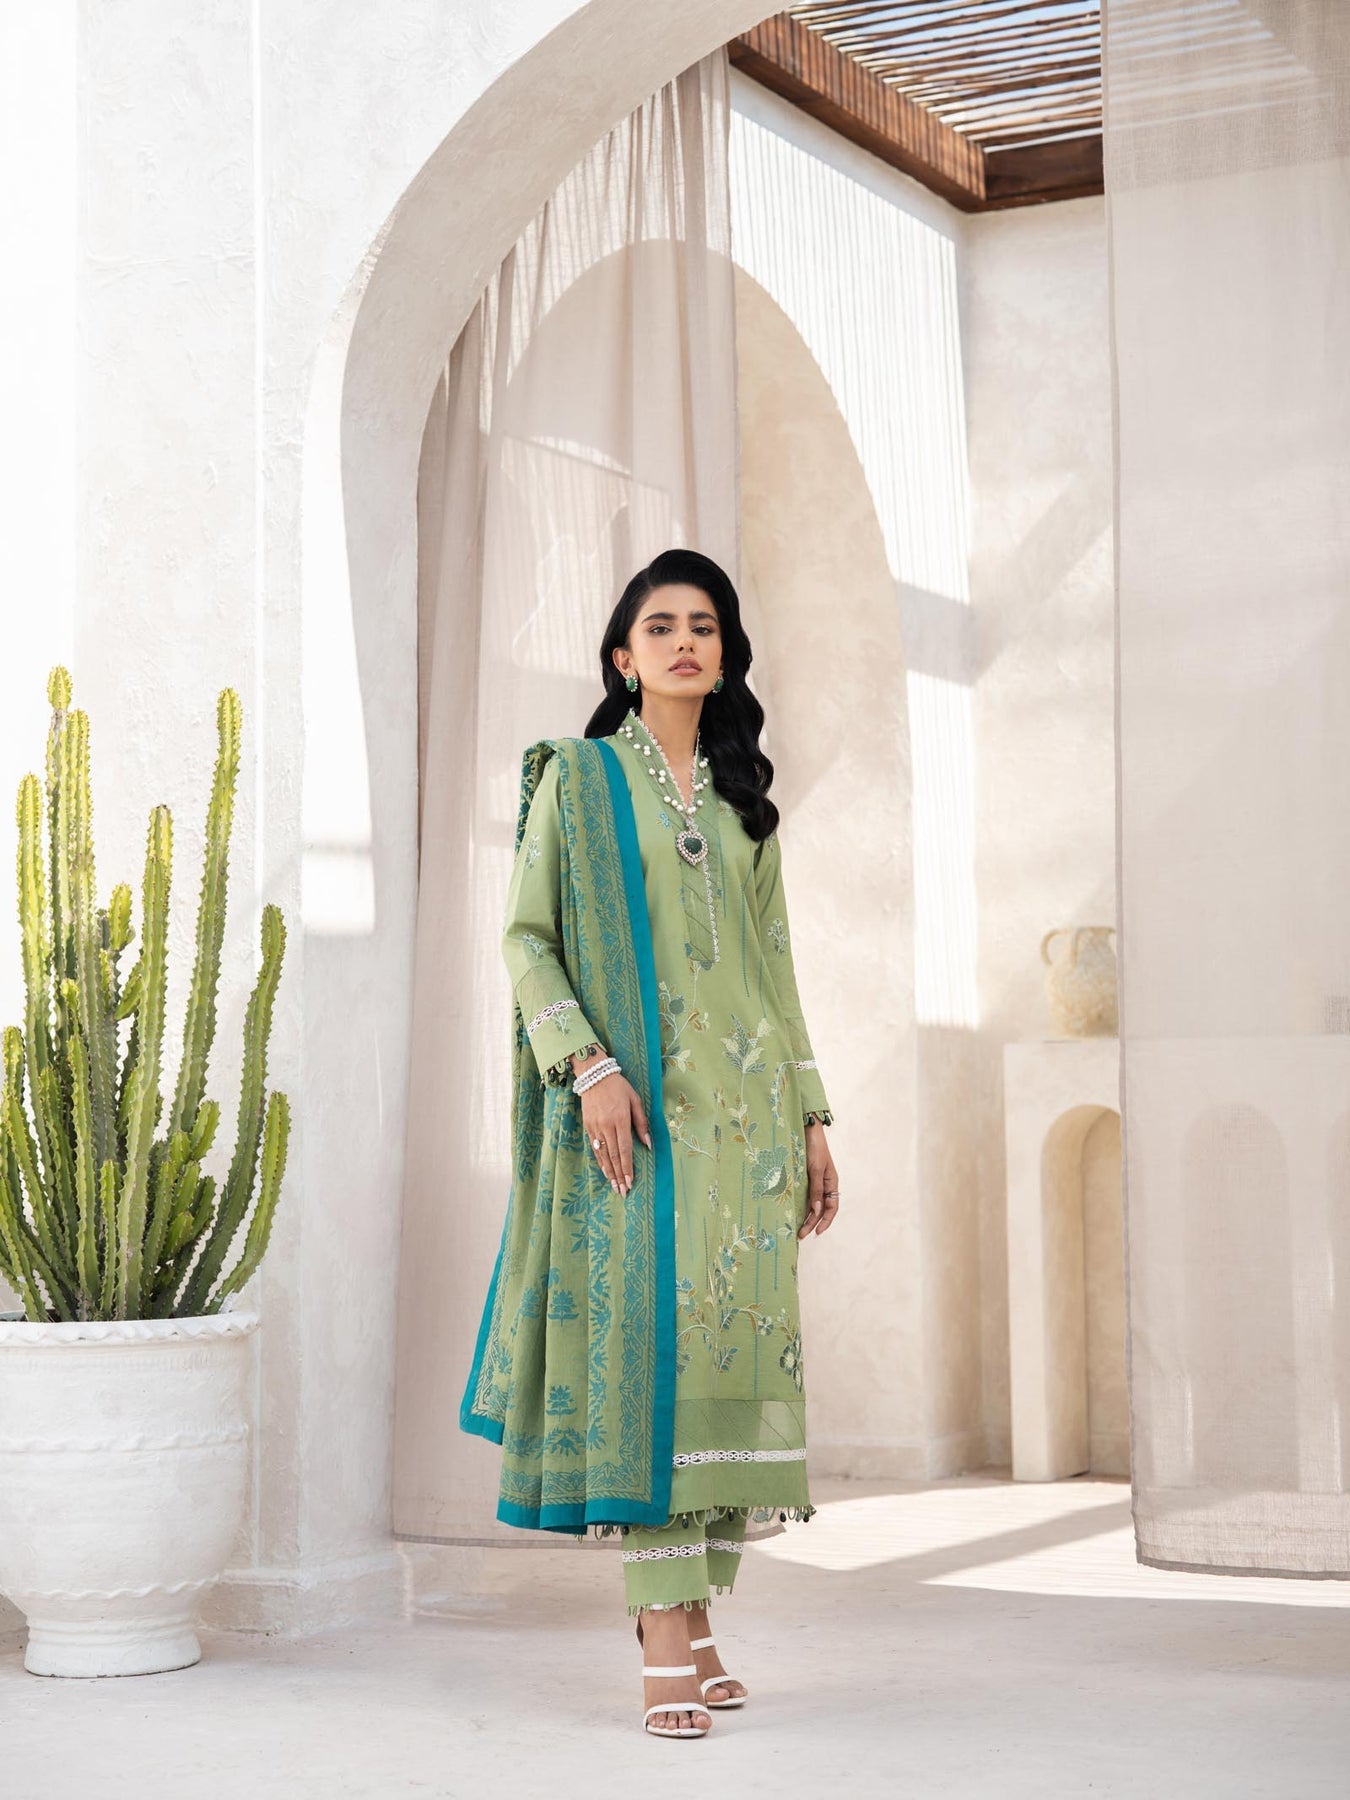 Taanabaana | Mem Saab Collection | M3242 - Khanumjan  Pakistani Clothes and Designer Dresses in UK, USA 